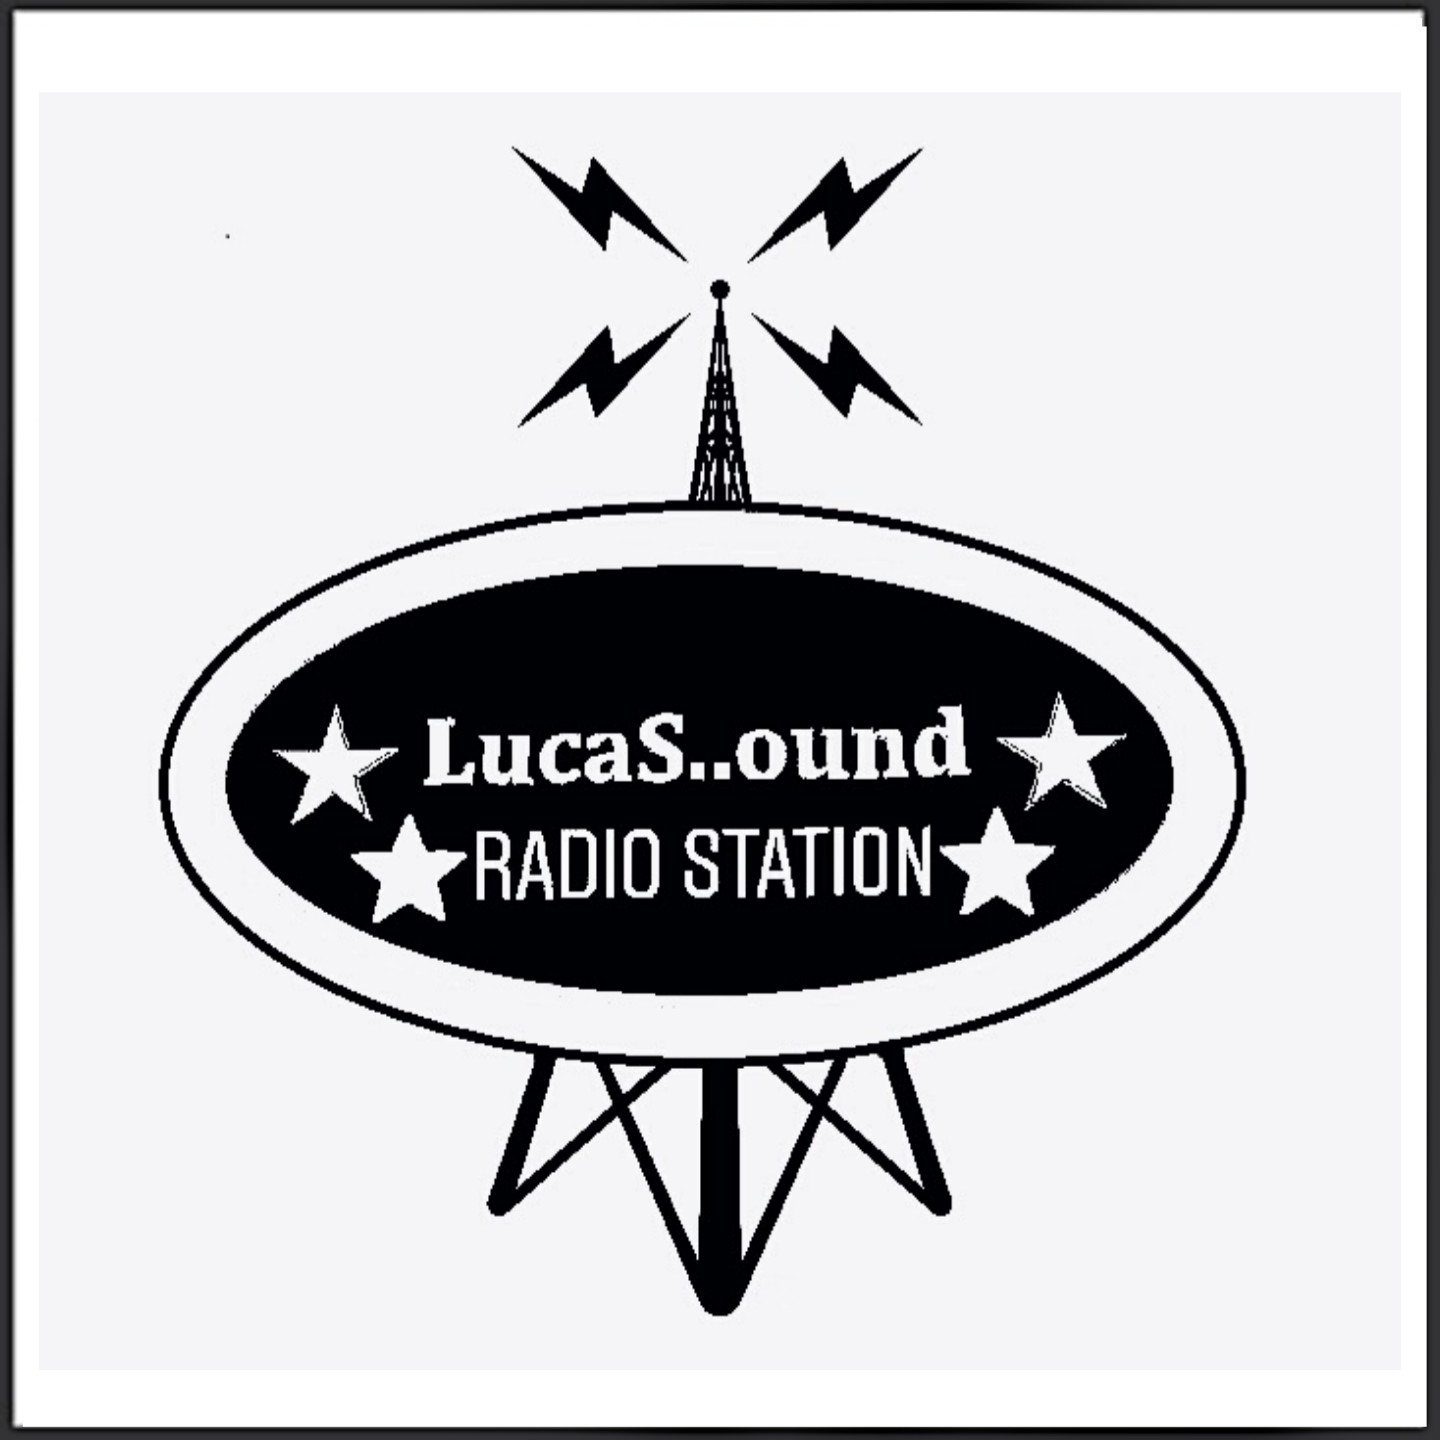 LucaS..ound Radio